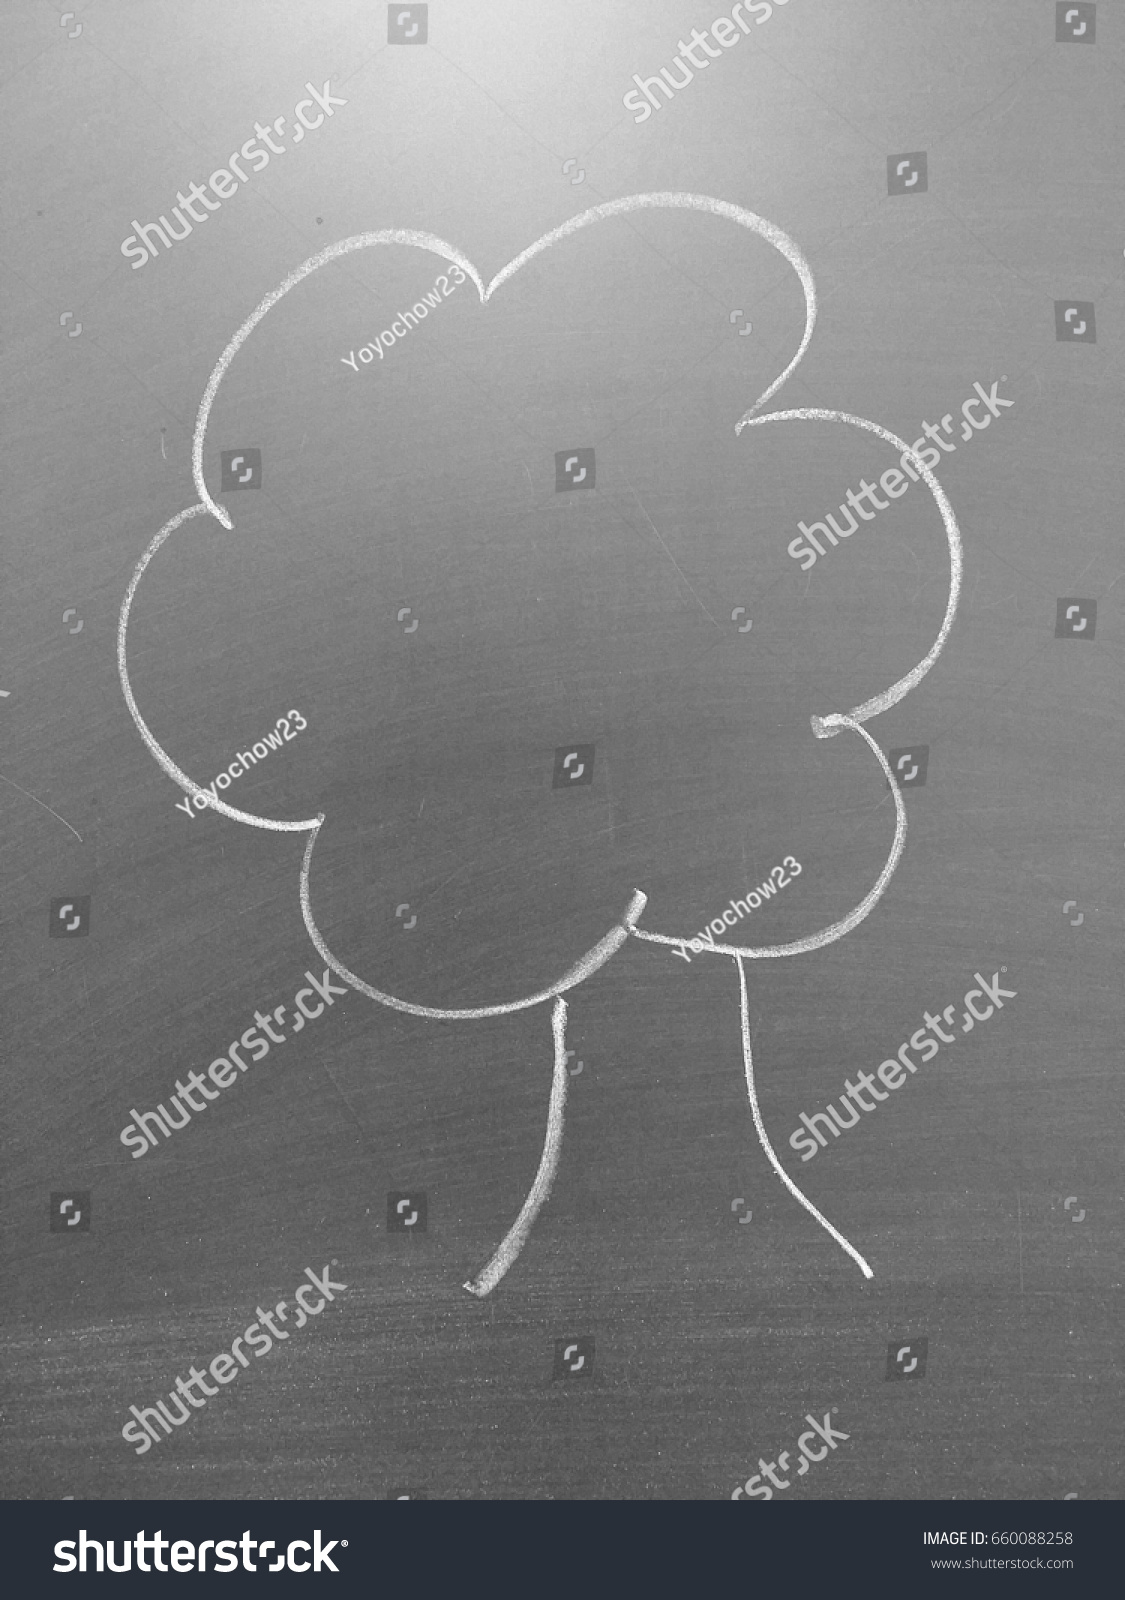 Blackboard with tree drawings #660088258